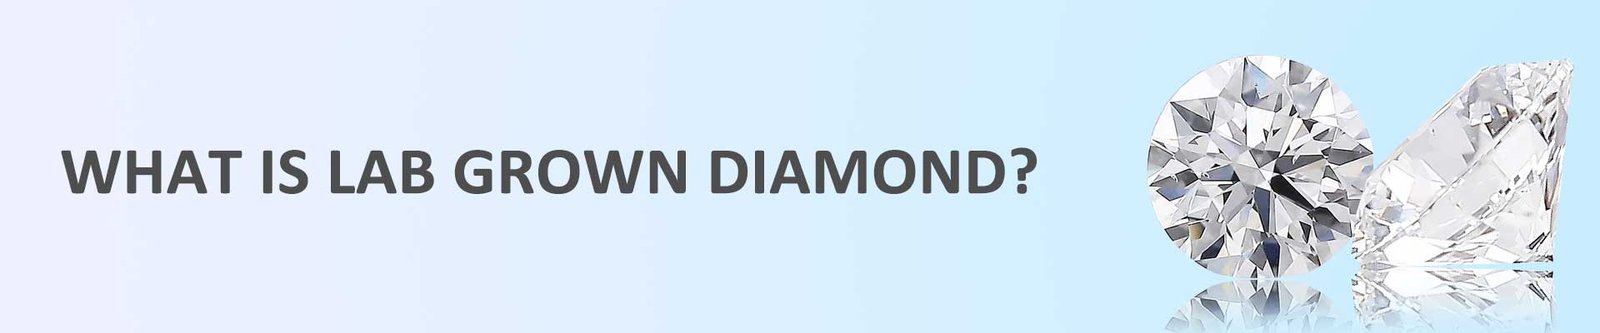 How Ajretail describe about Lab Grown Diamond?